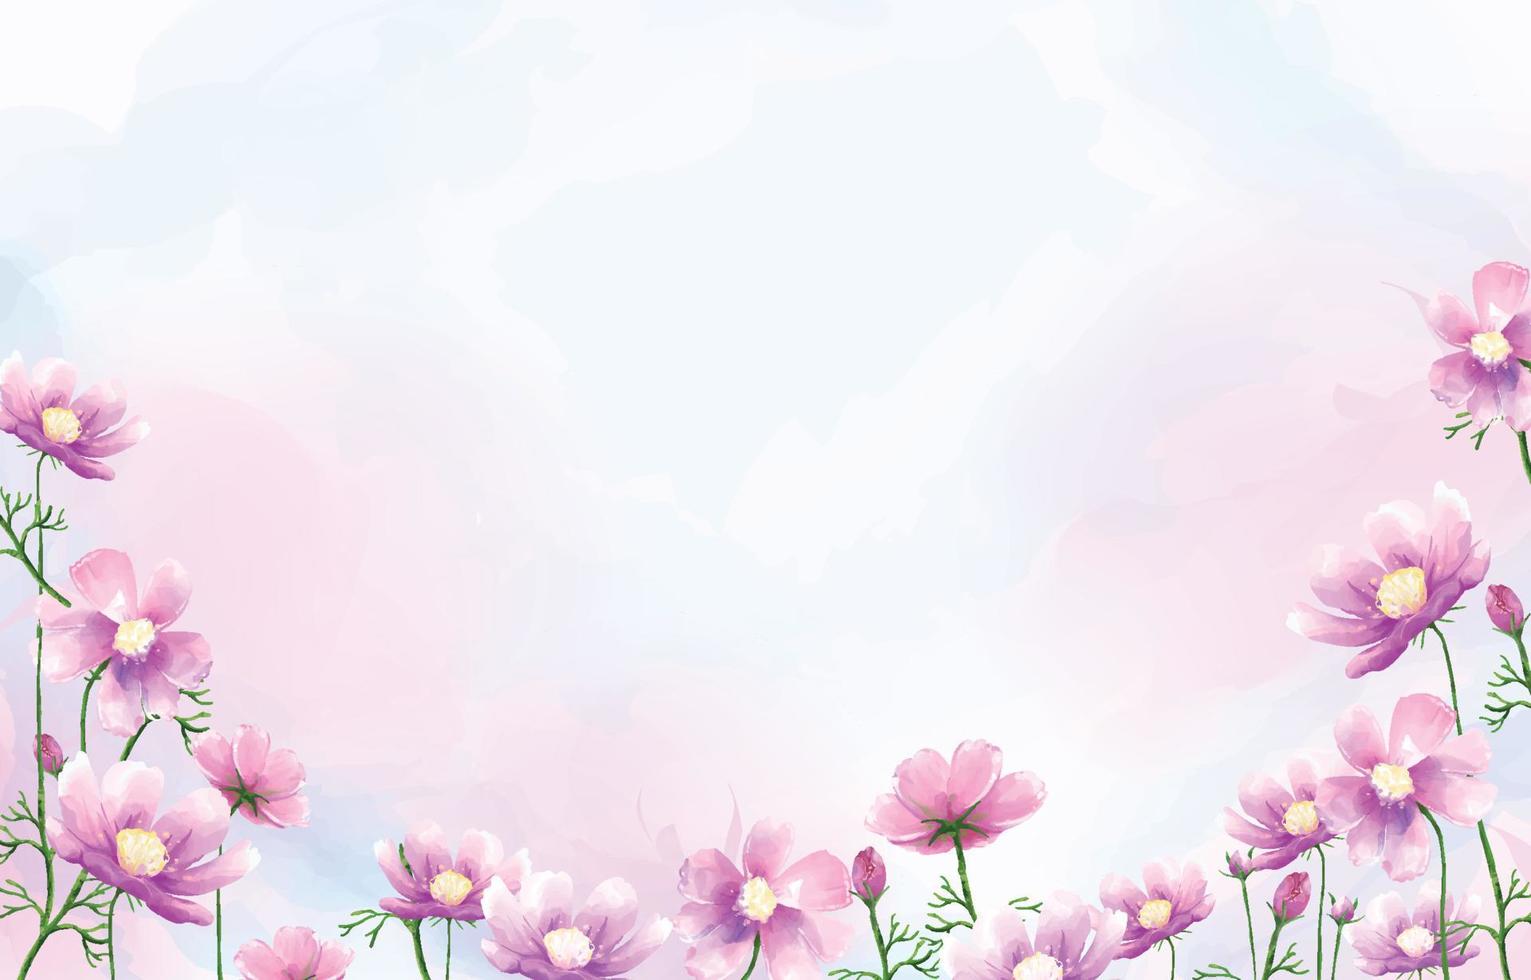 Cosmos Flower Background in Watercolor vector